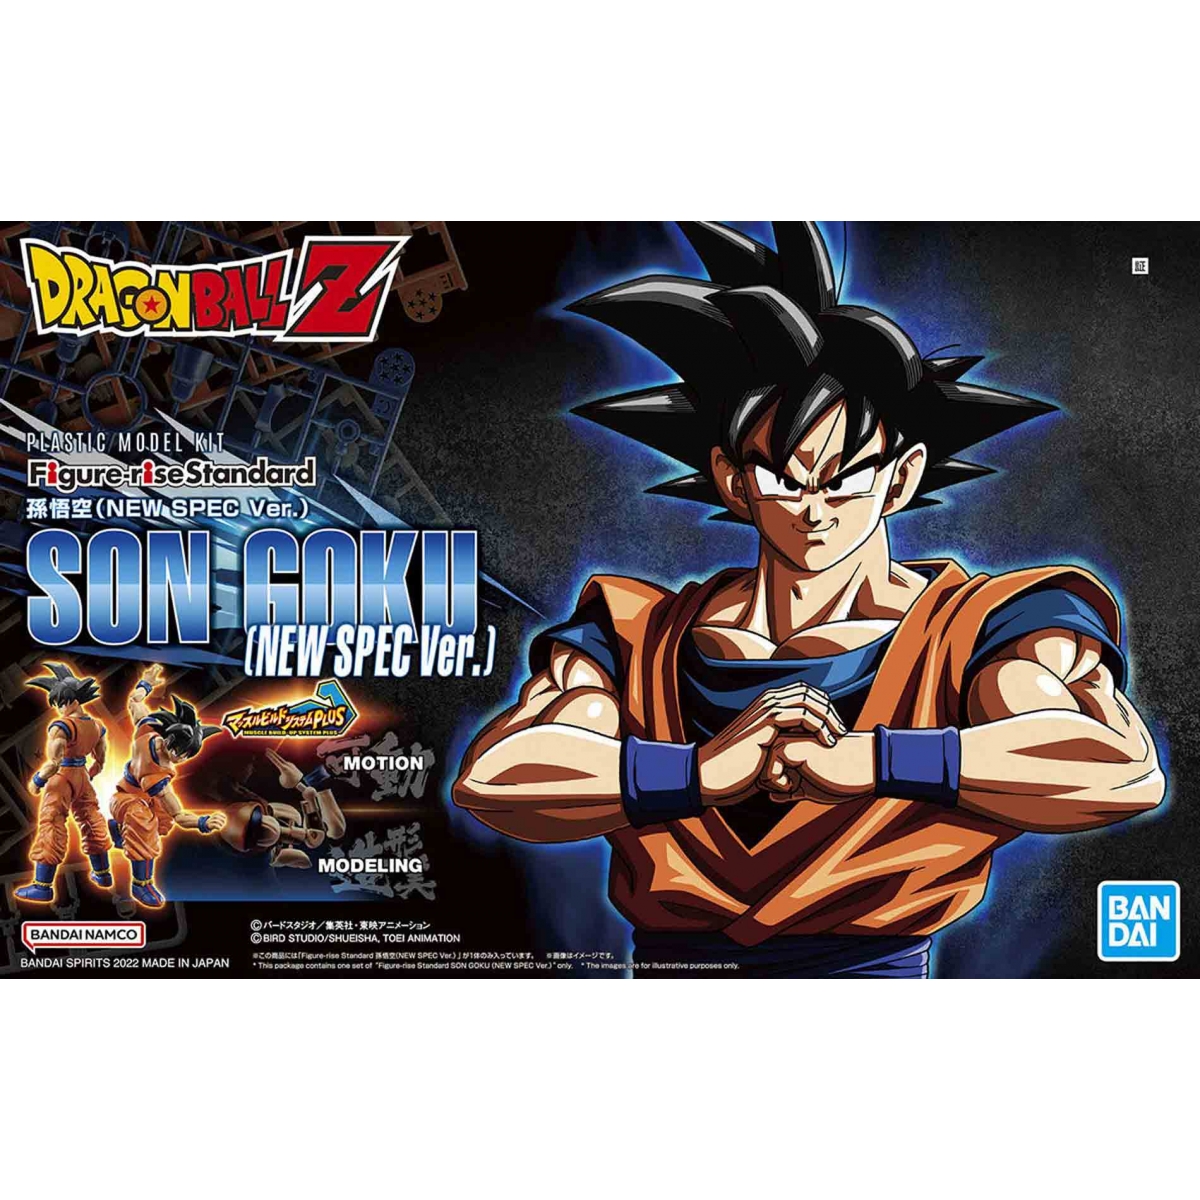 Dragon Ball Z Son Goku (New Spec Ver.) Figure Rise Standard